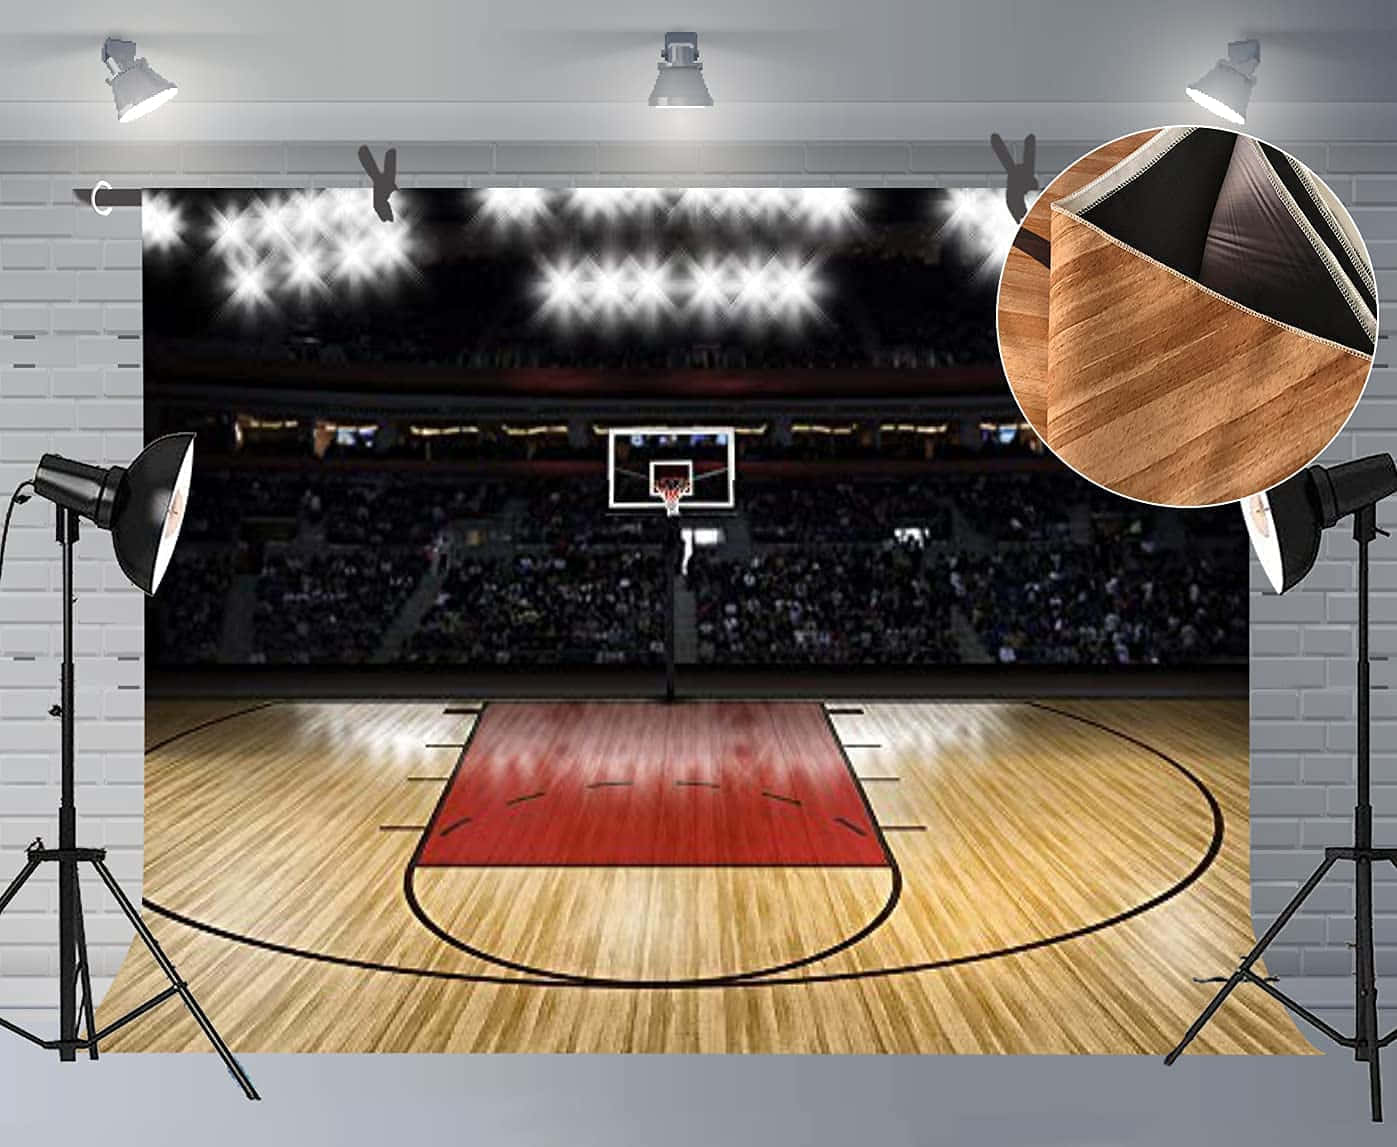 Perfektplejet Basketball-bane I En Gymnastiksal